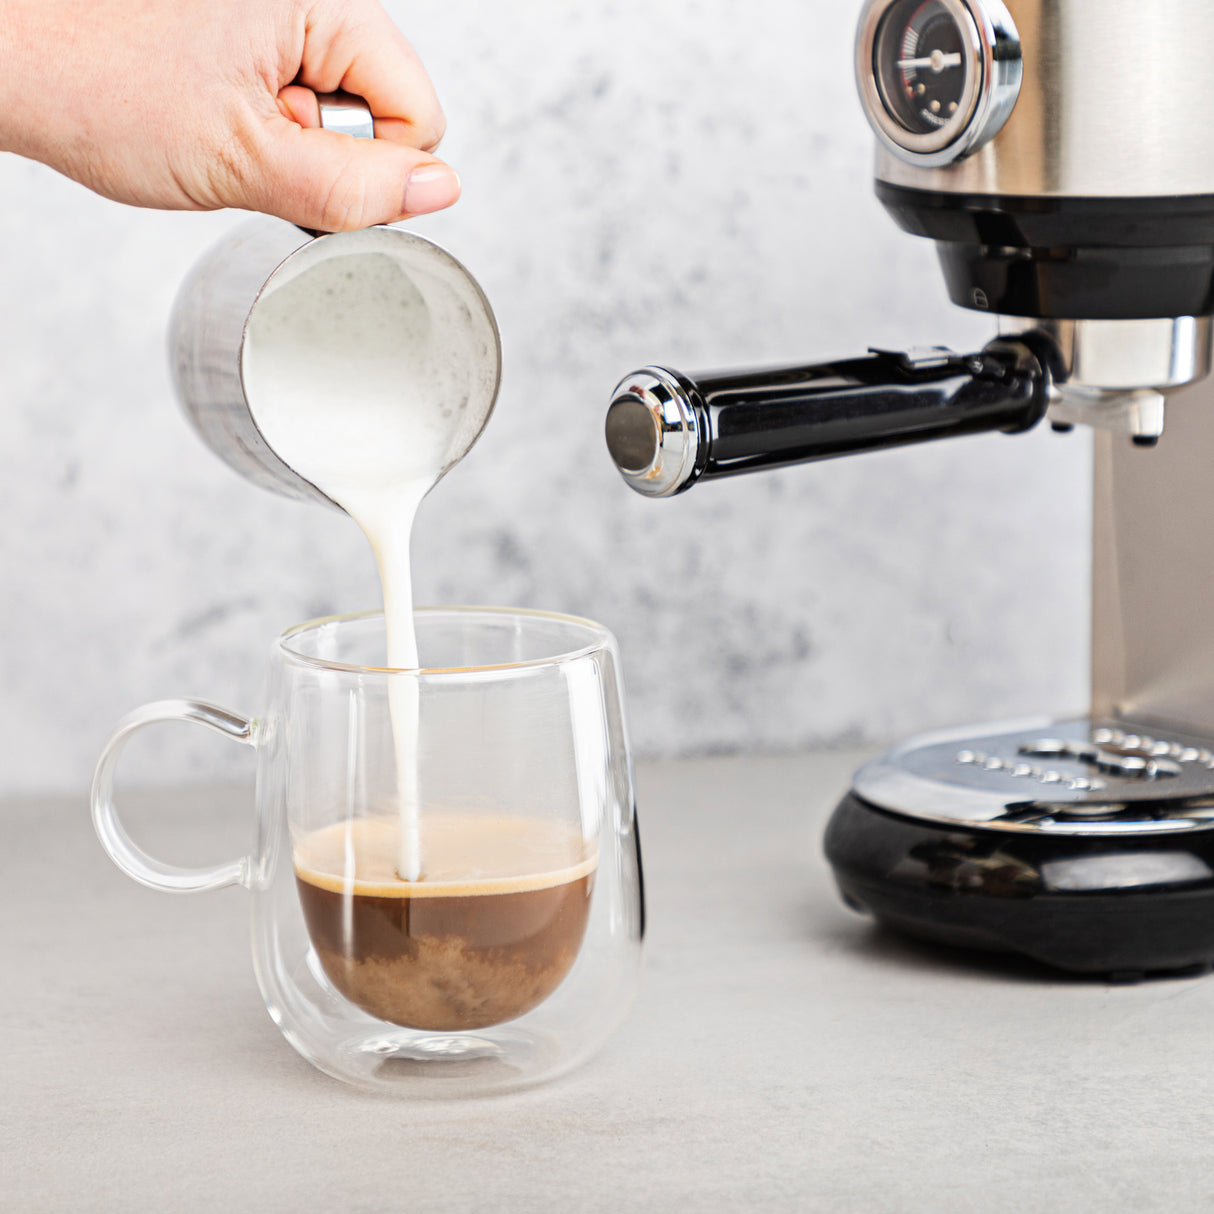 Vitinni Espresso Machine - Coffee Machine with Milk Frother